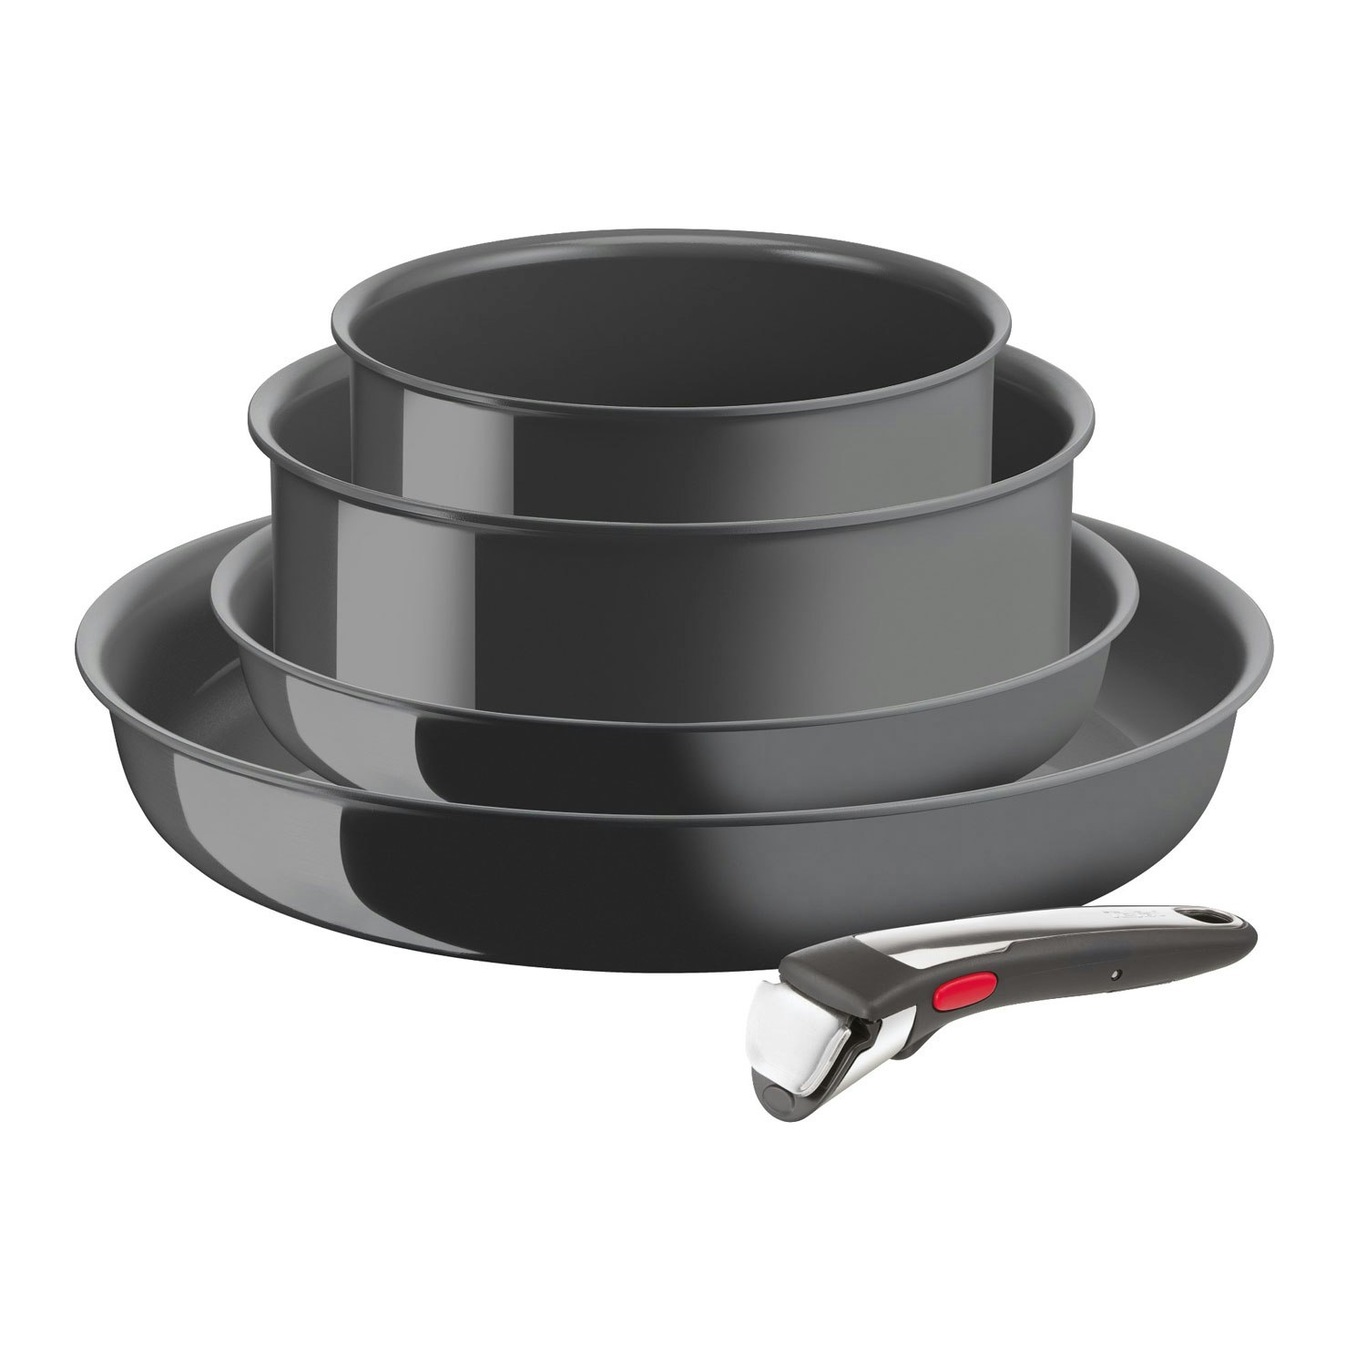 https://royaldesign.com/image/2/tefal-ingenio-renew-on-pot-set-5-pieces-0?w=800&quality=80